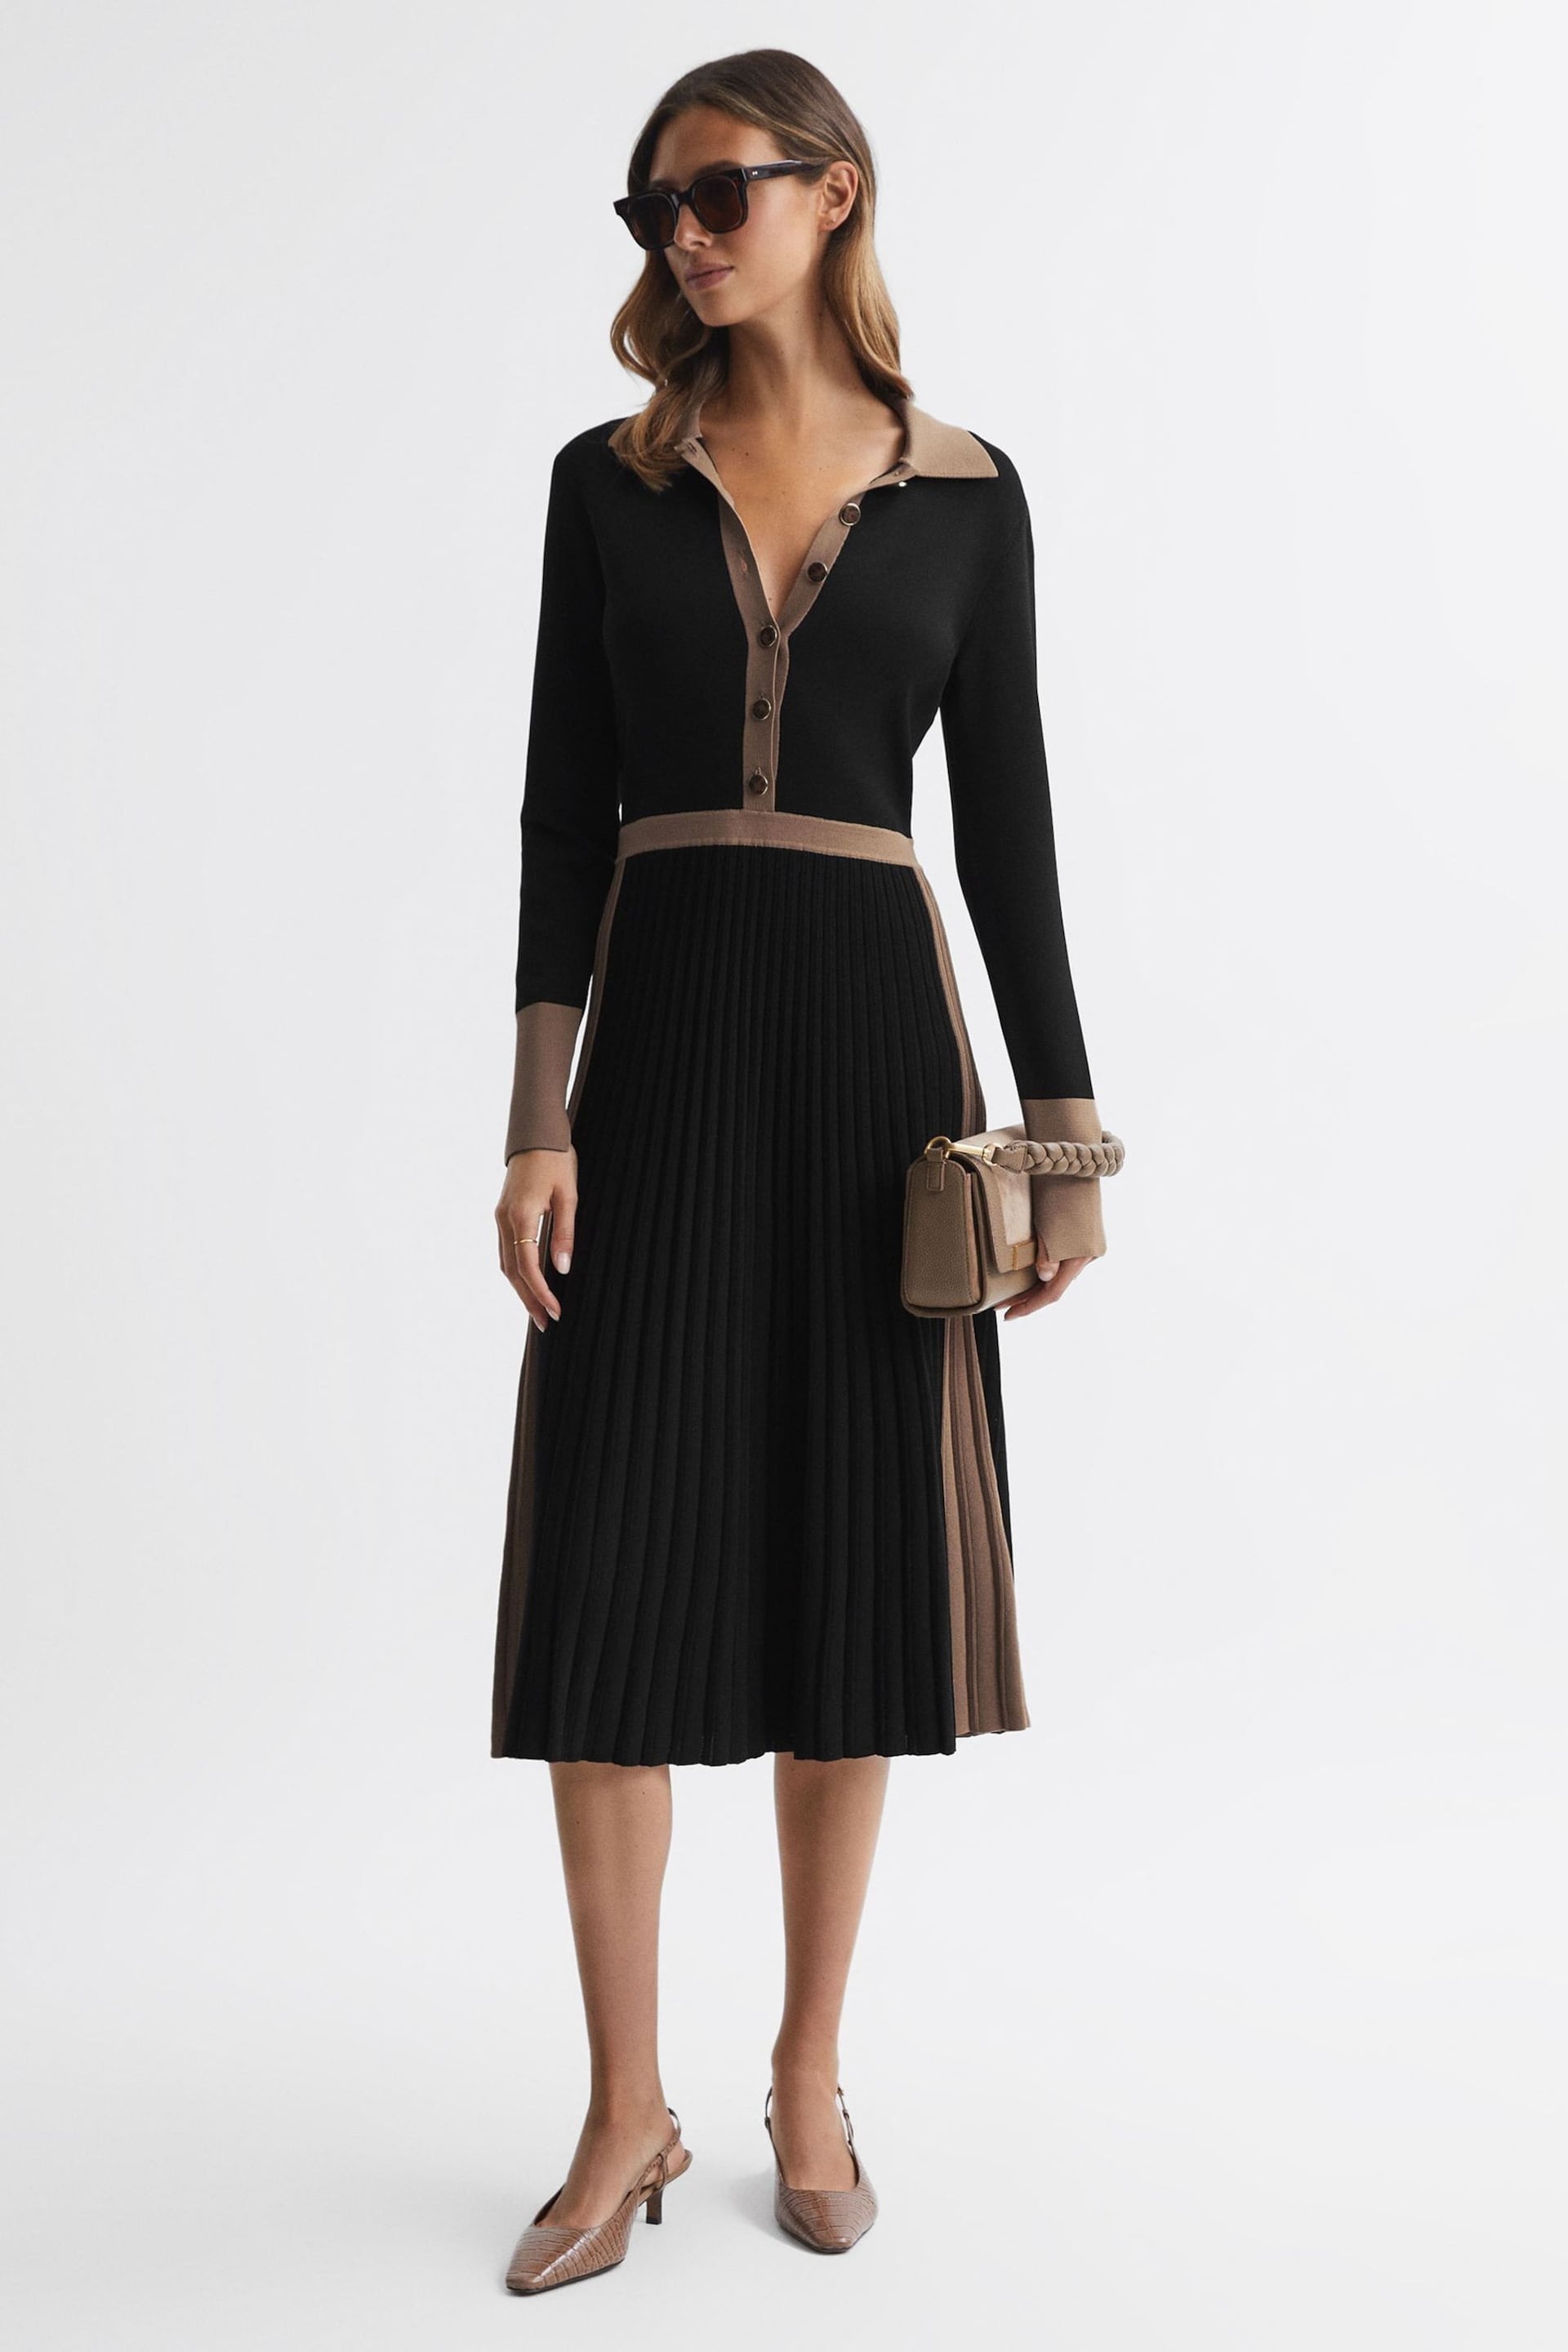 Reiss Black/Camel Mia Knitted Colourblock Pleated Midi Dress - Image 1 of 4